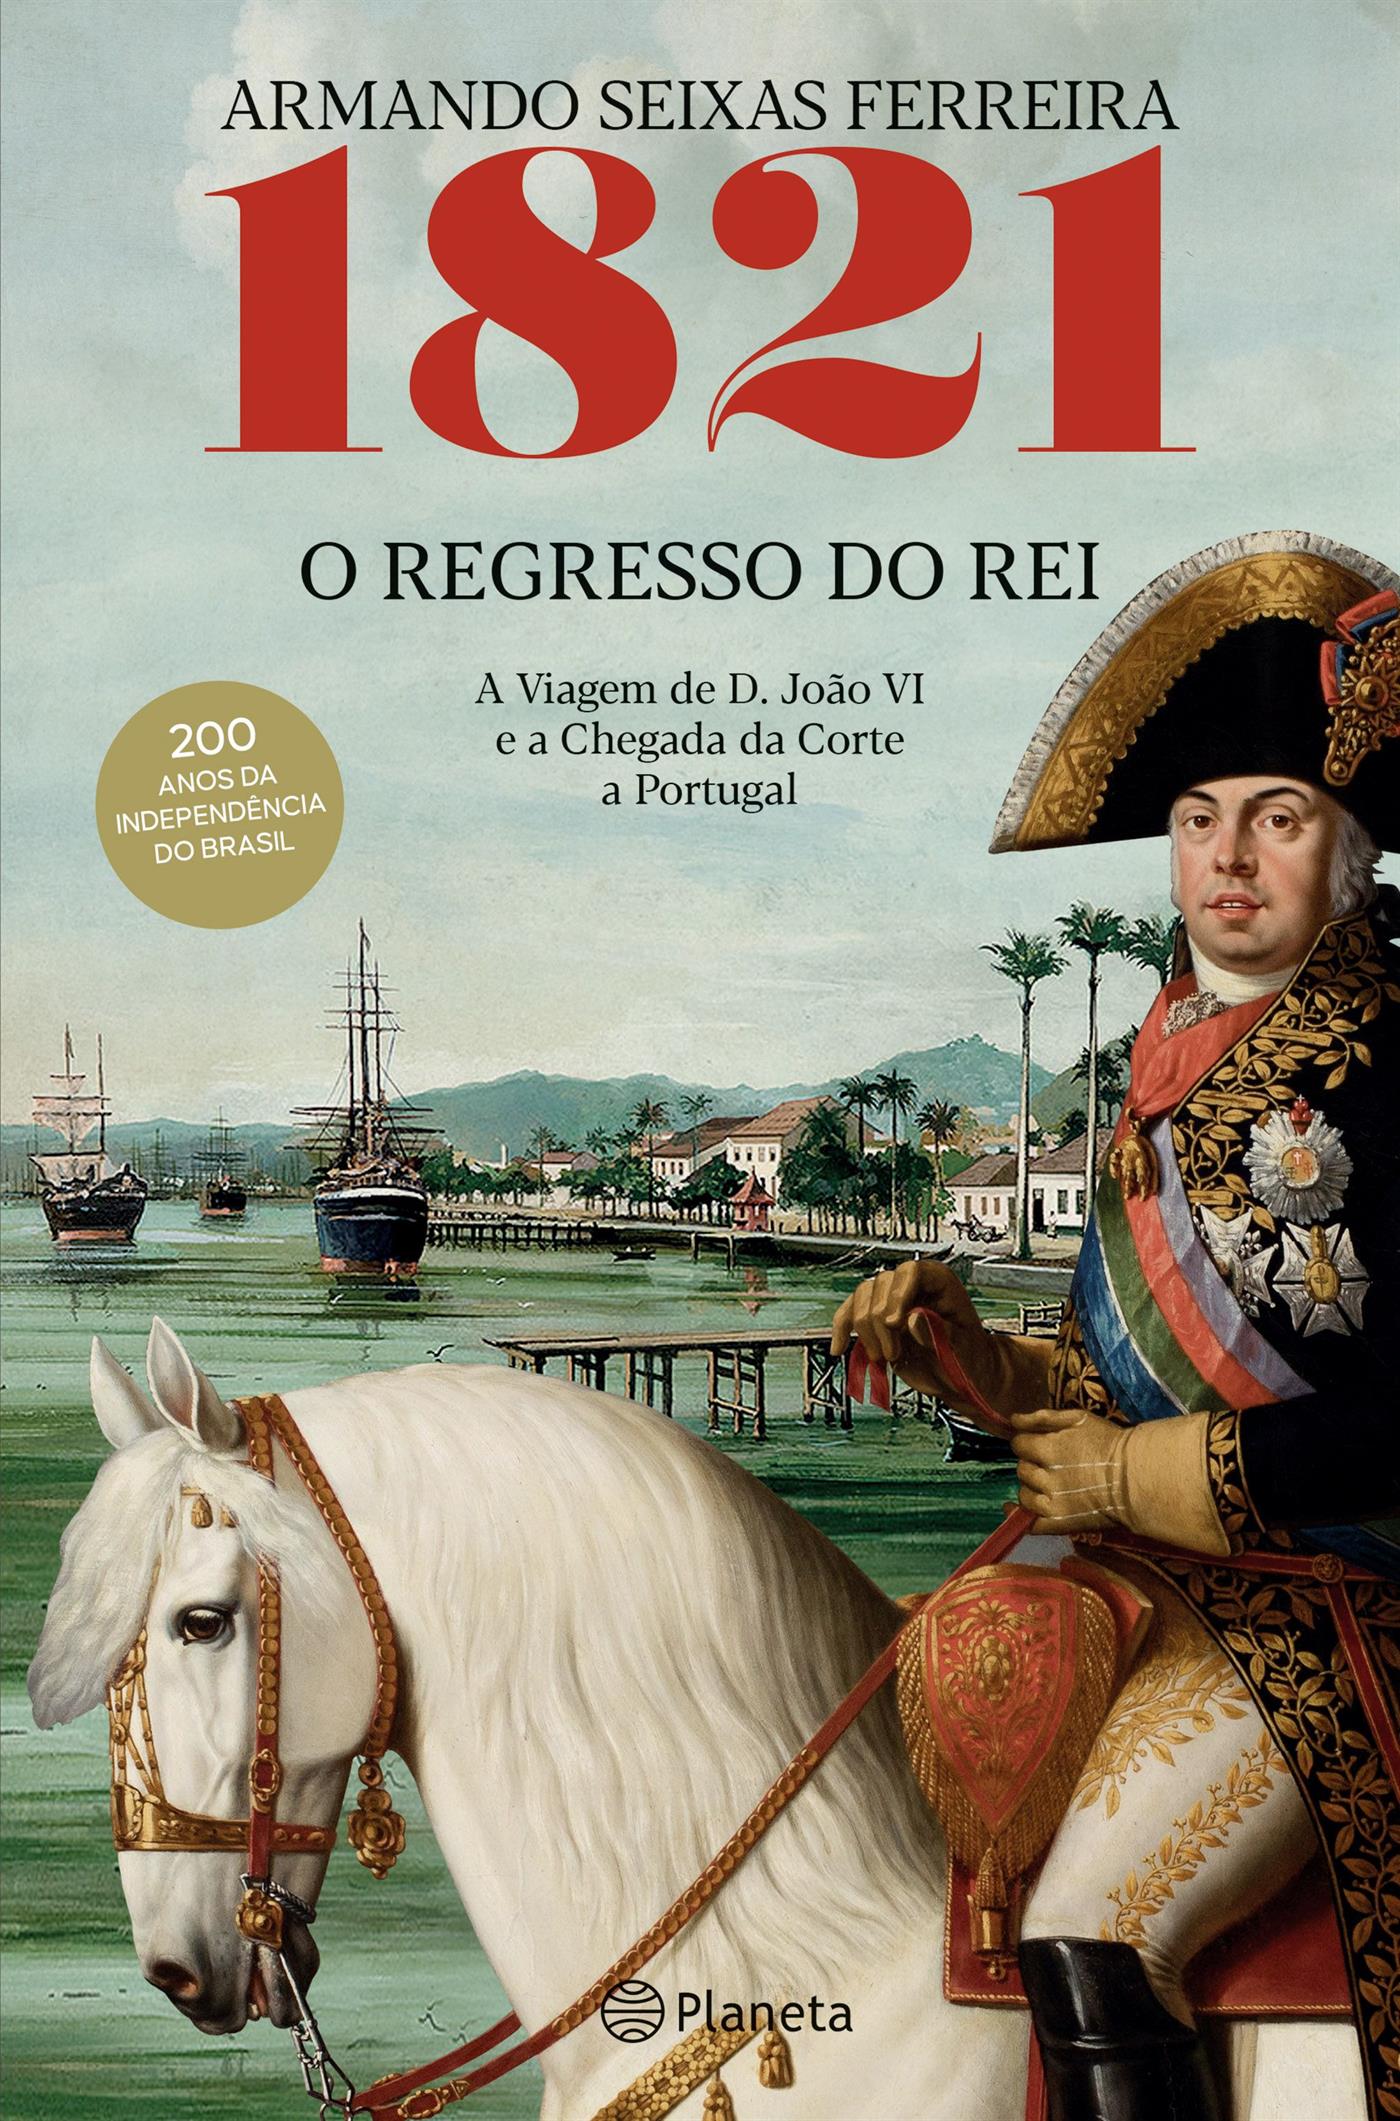 "The idea of ​​King João VI as a terrible man who abandoned the Portuguese people was Napoleon's propaganda."